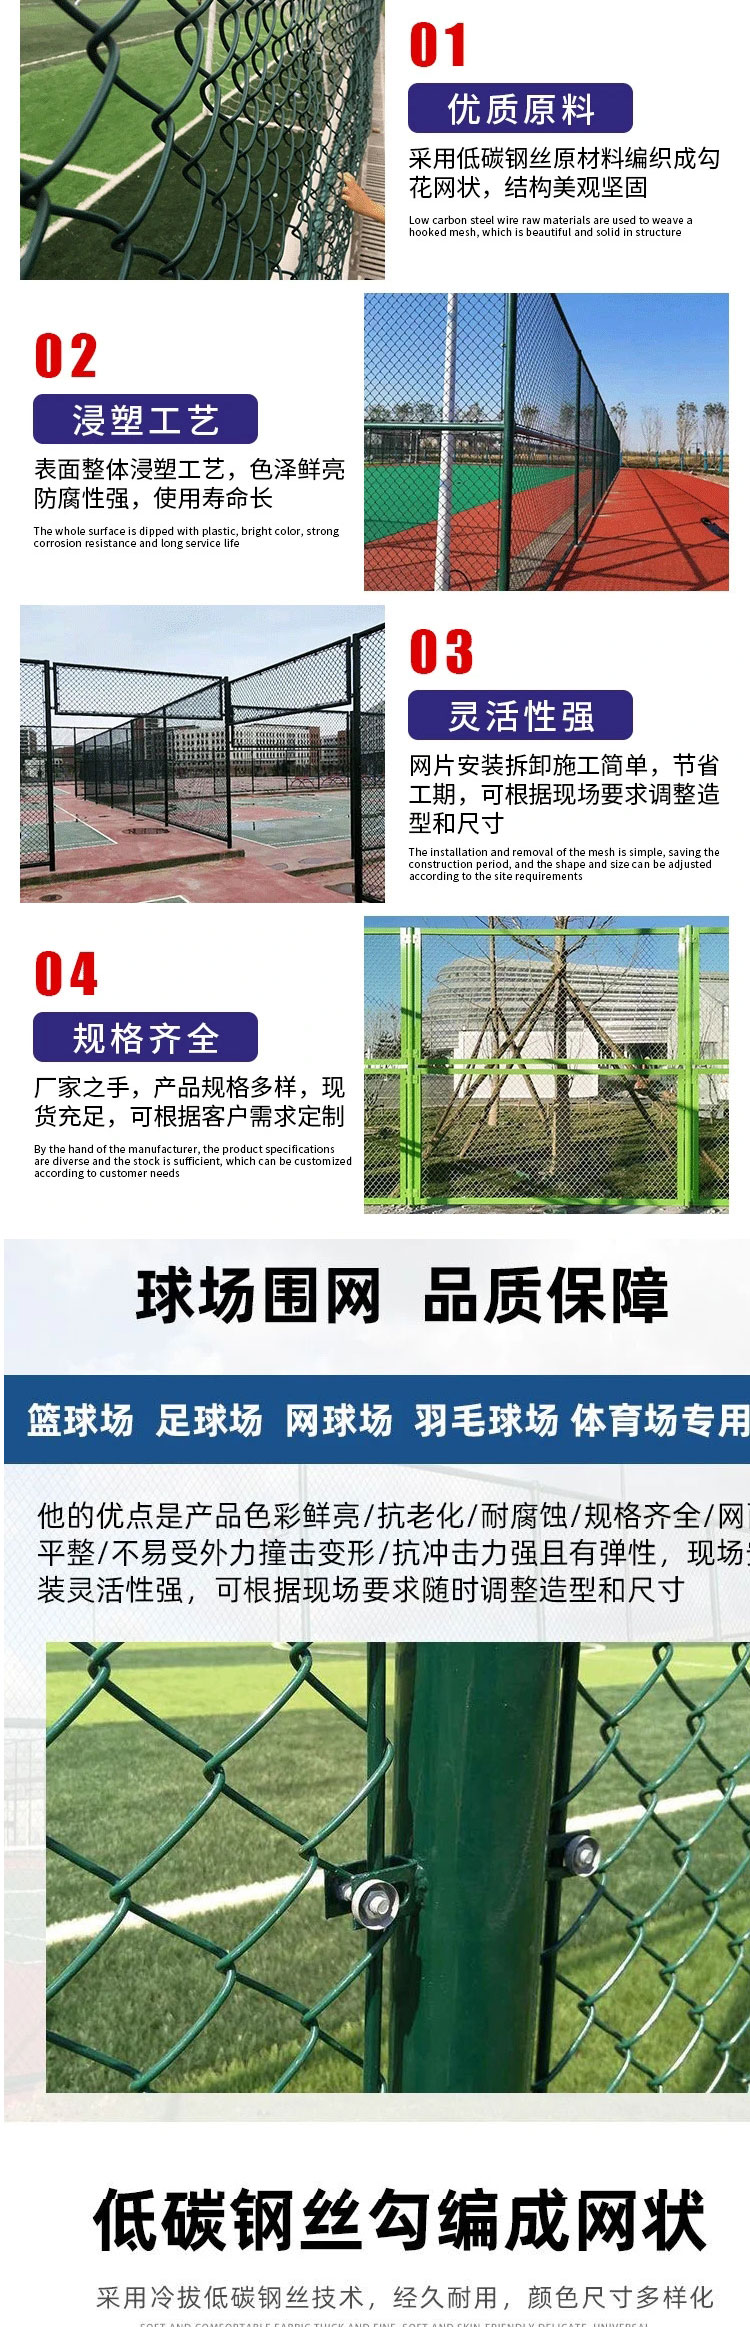 Stadium fence, outdoor basketball court fence, football field fence, court protective net, school playground diamond net